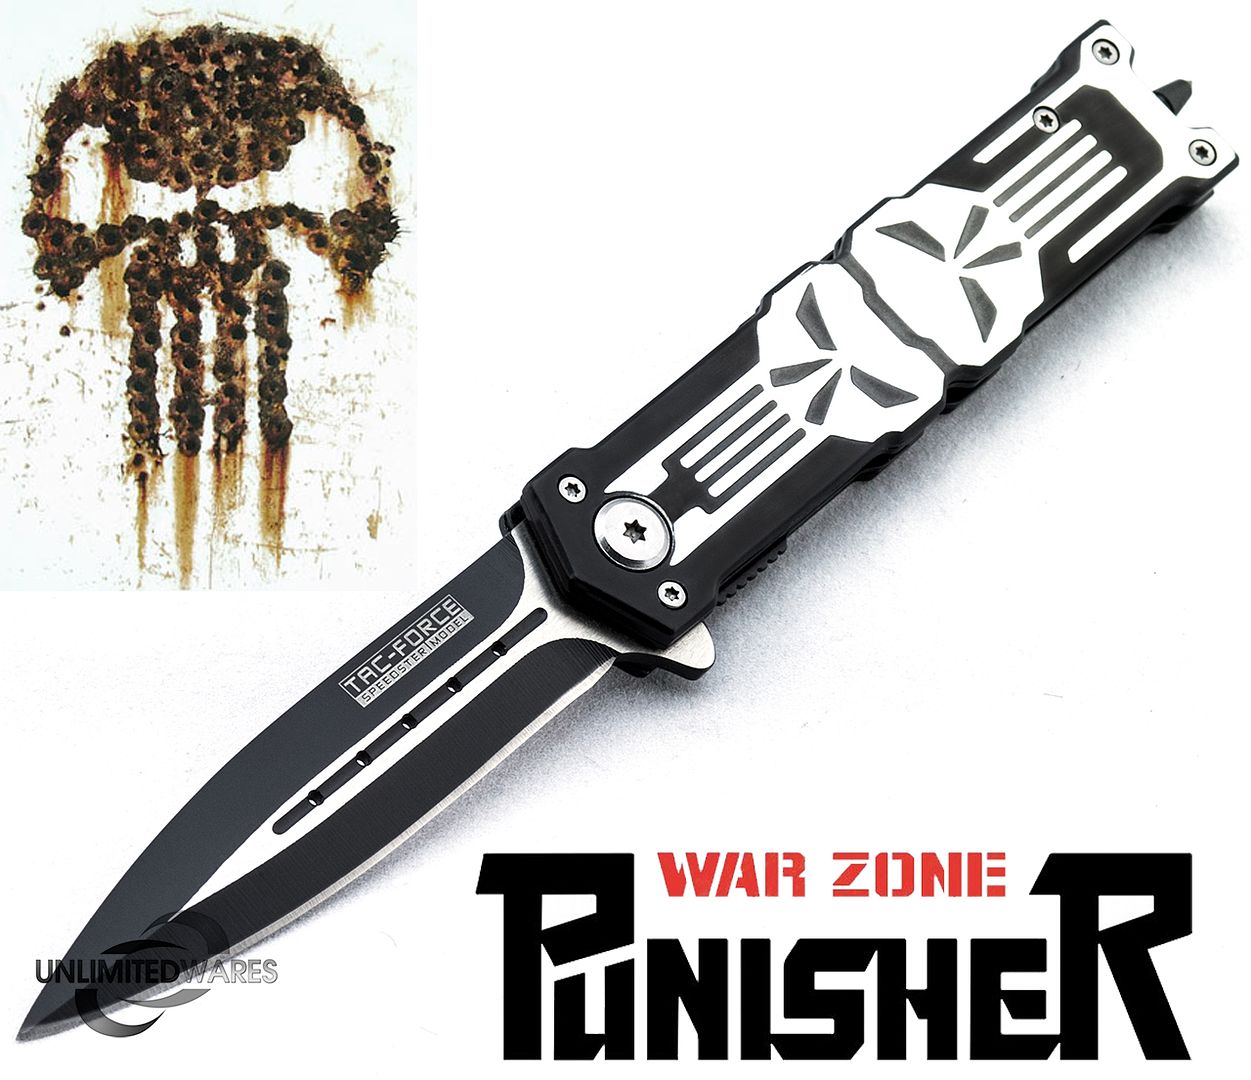 25 Tac Force Punisher War Zone Spring Assisted Knife